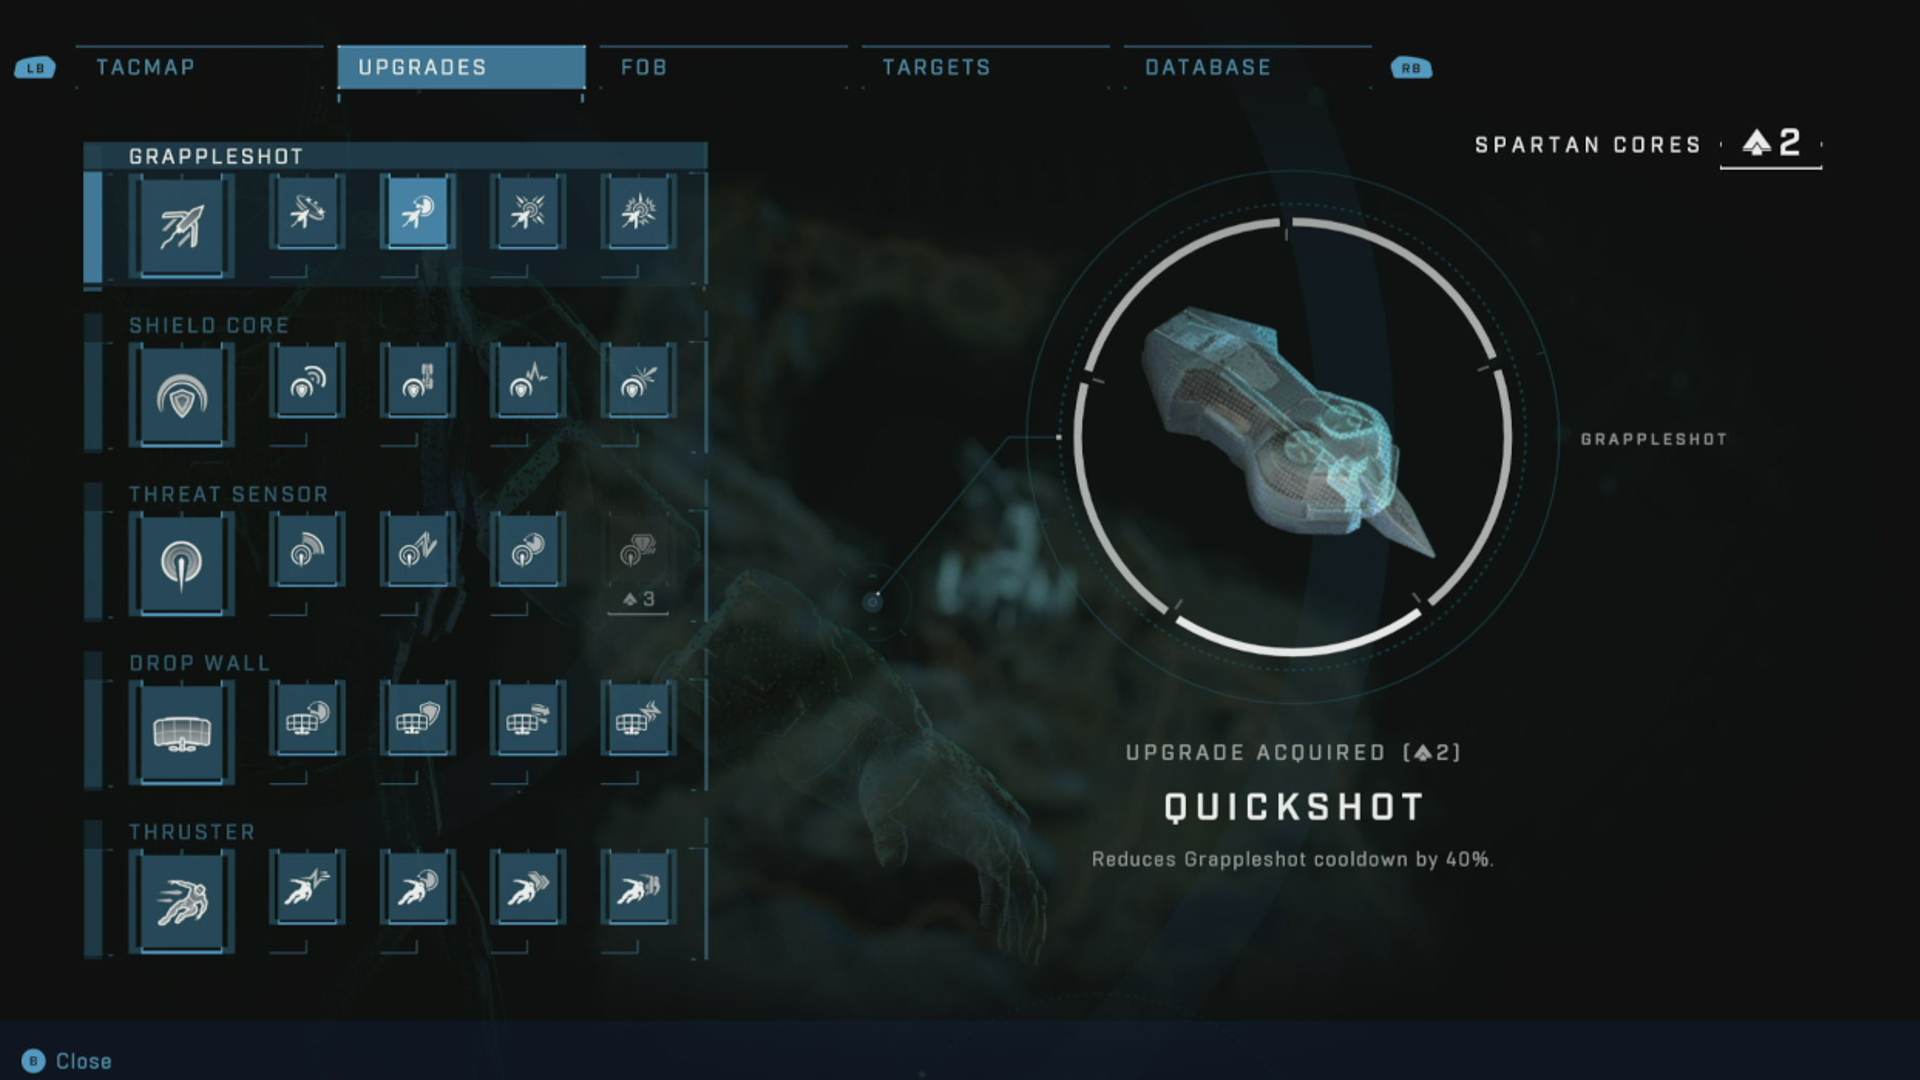 Halo Infinite Best Upgrades: The menu showing the quickshot upgrade.